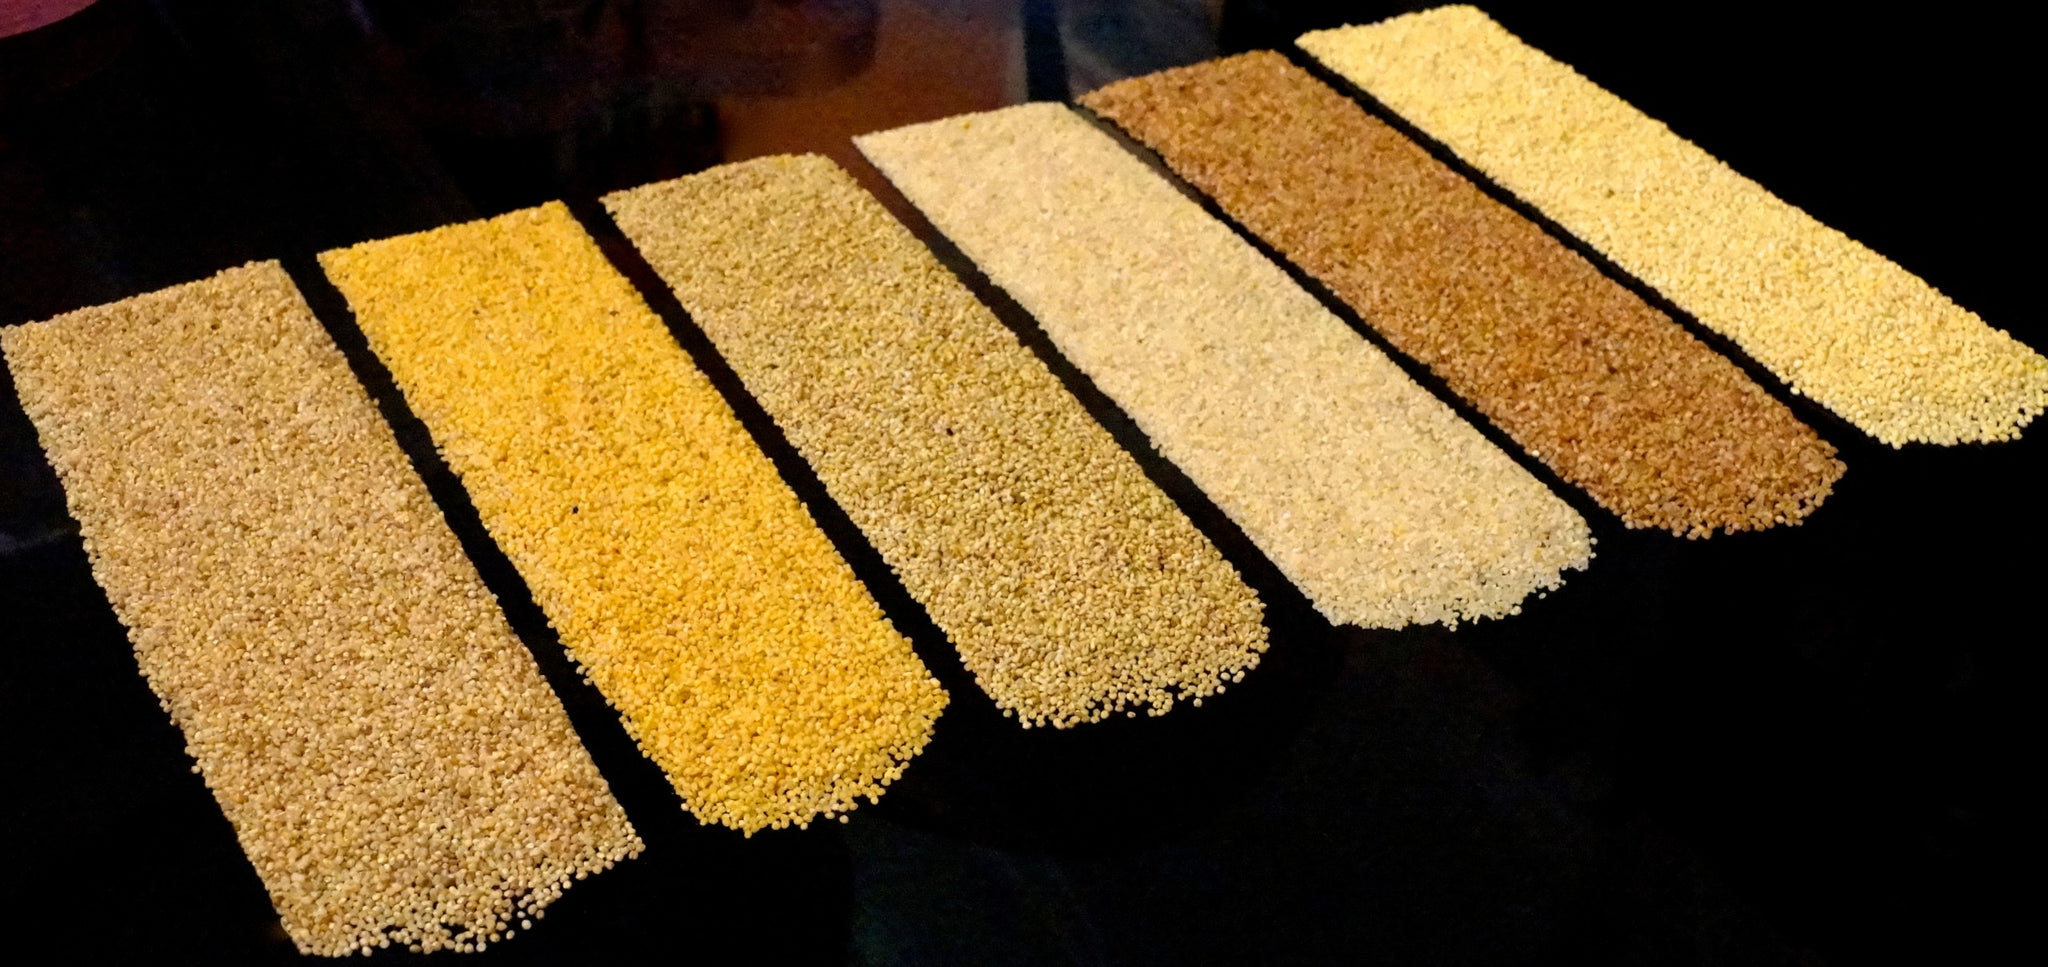 Buchi Method Processed Siridhanya/Millets(20 lb each)